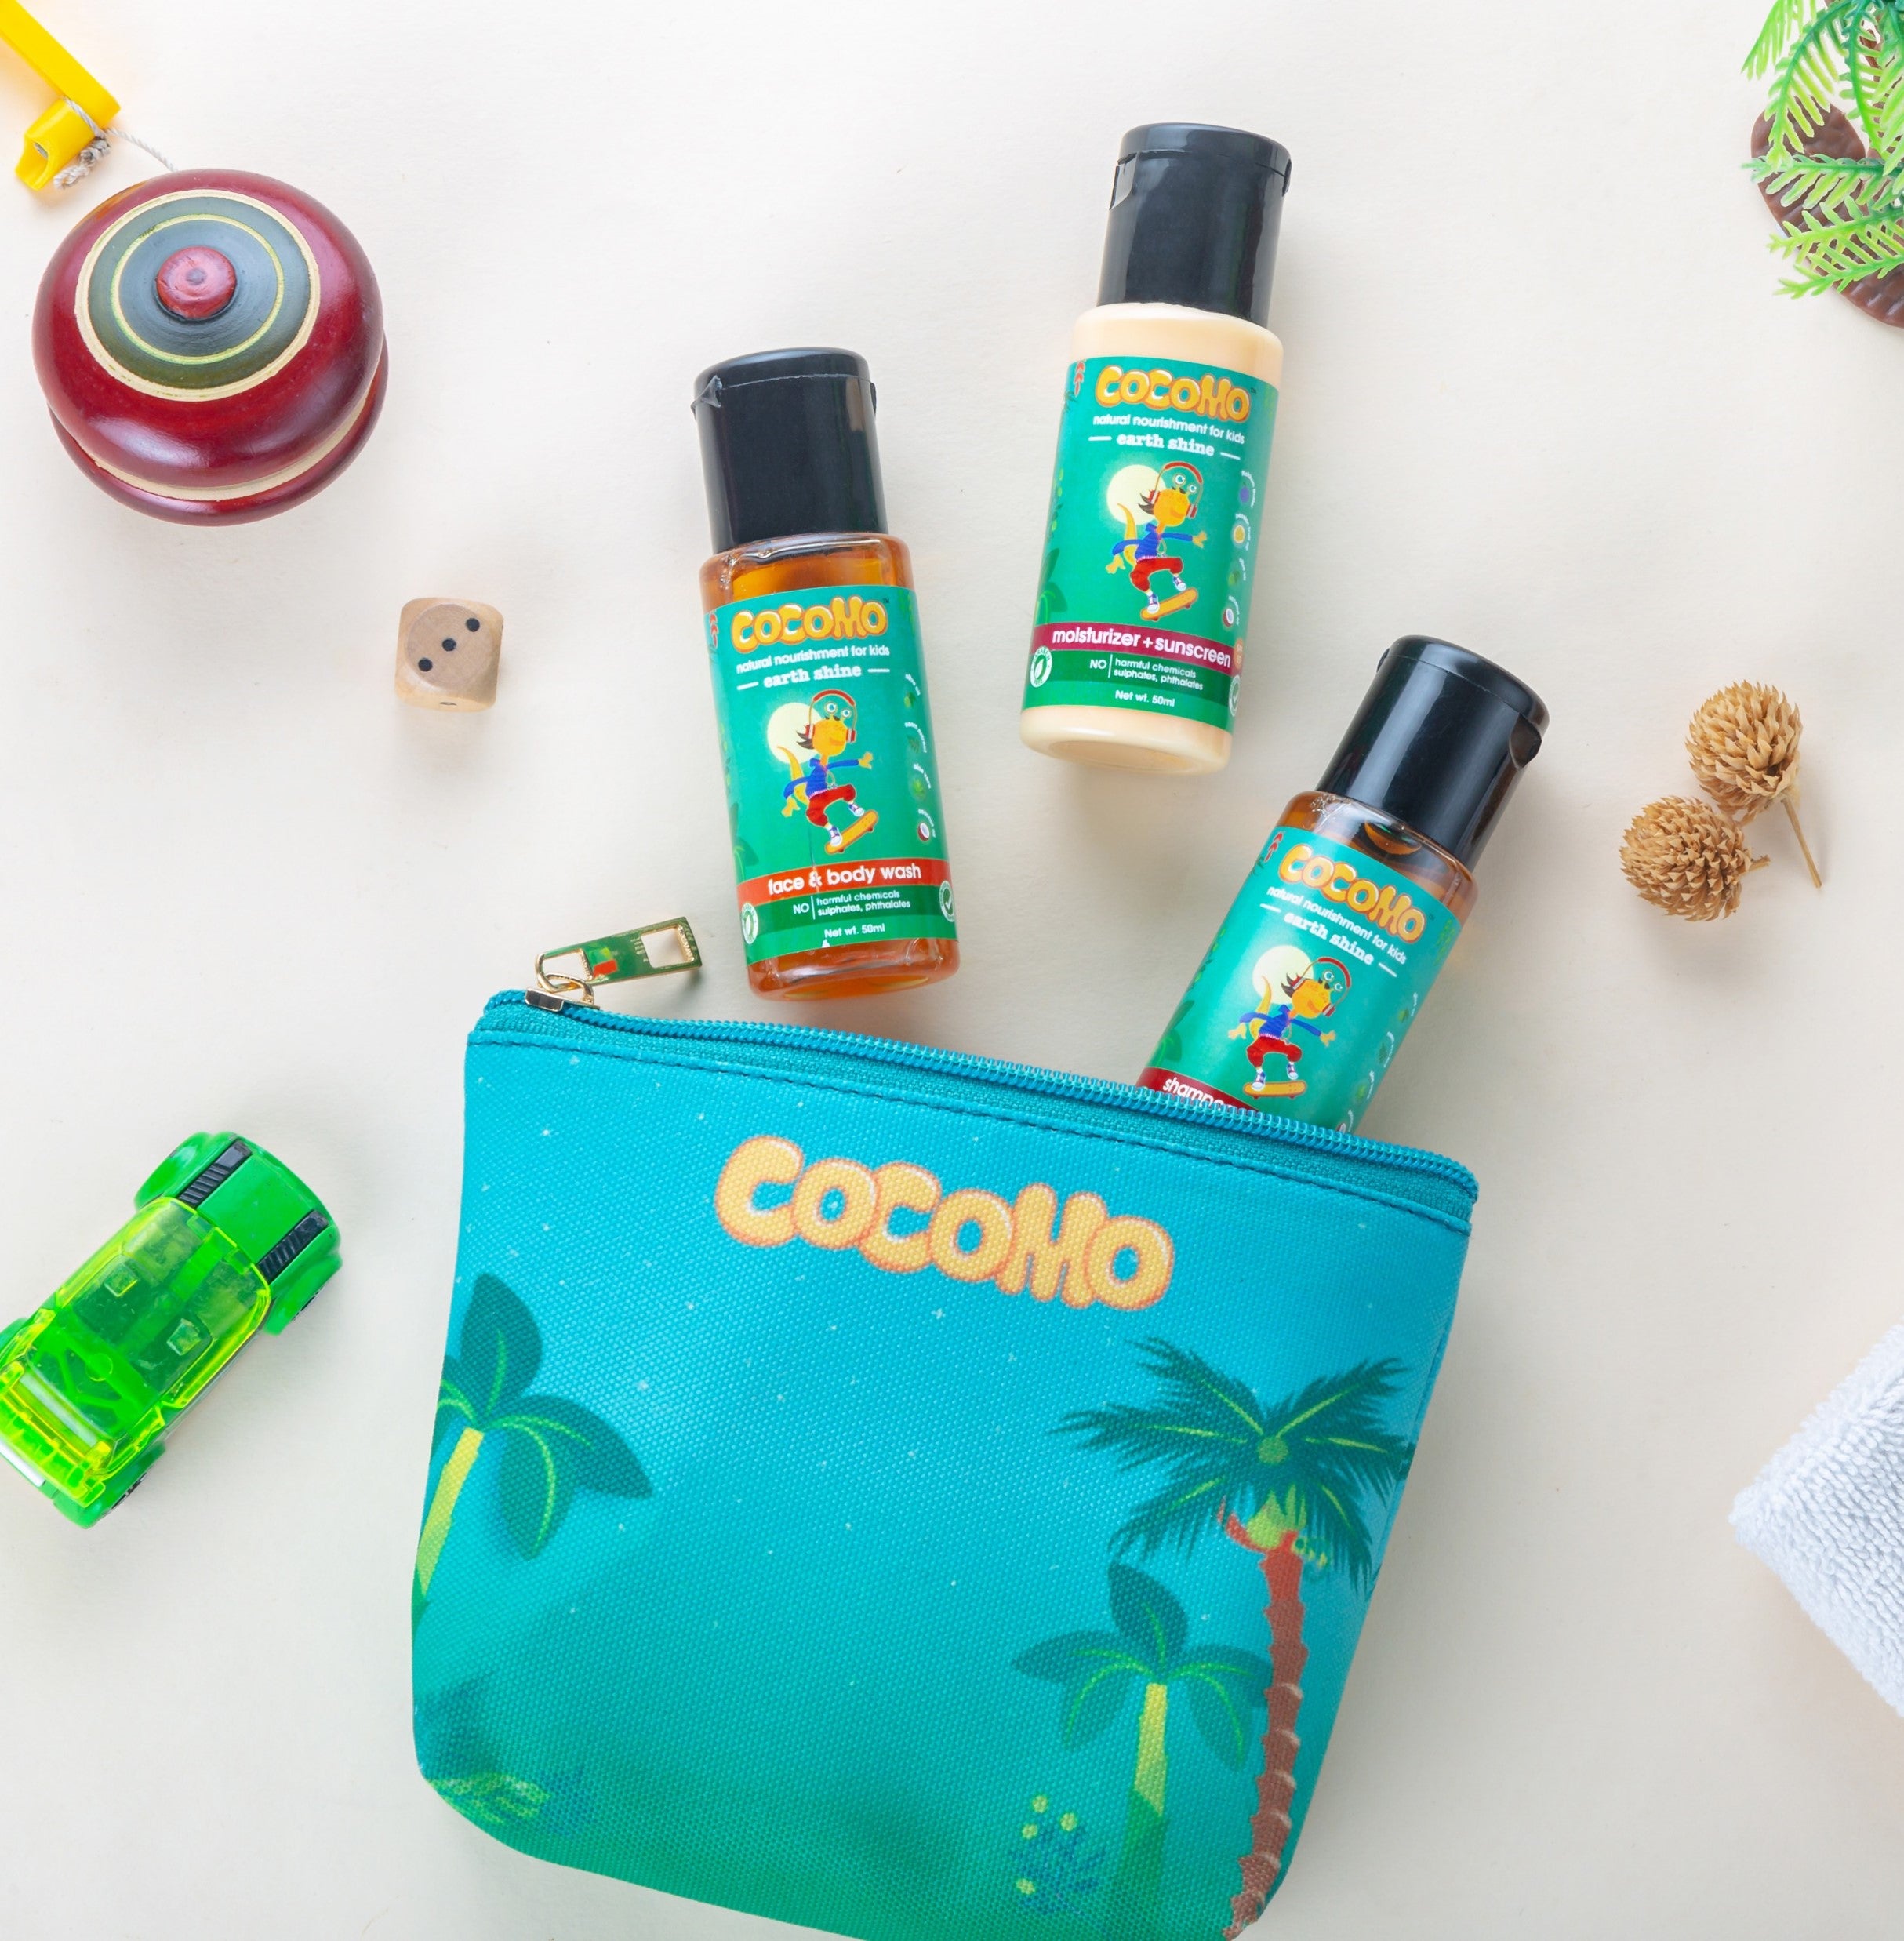 Cocomo Travel & Gift Pack - Earth Shine